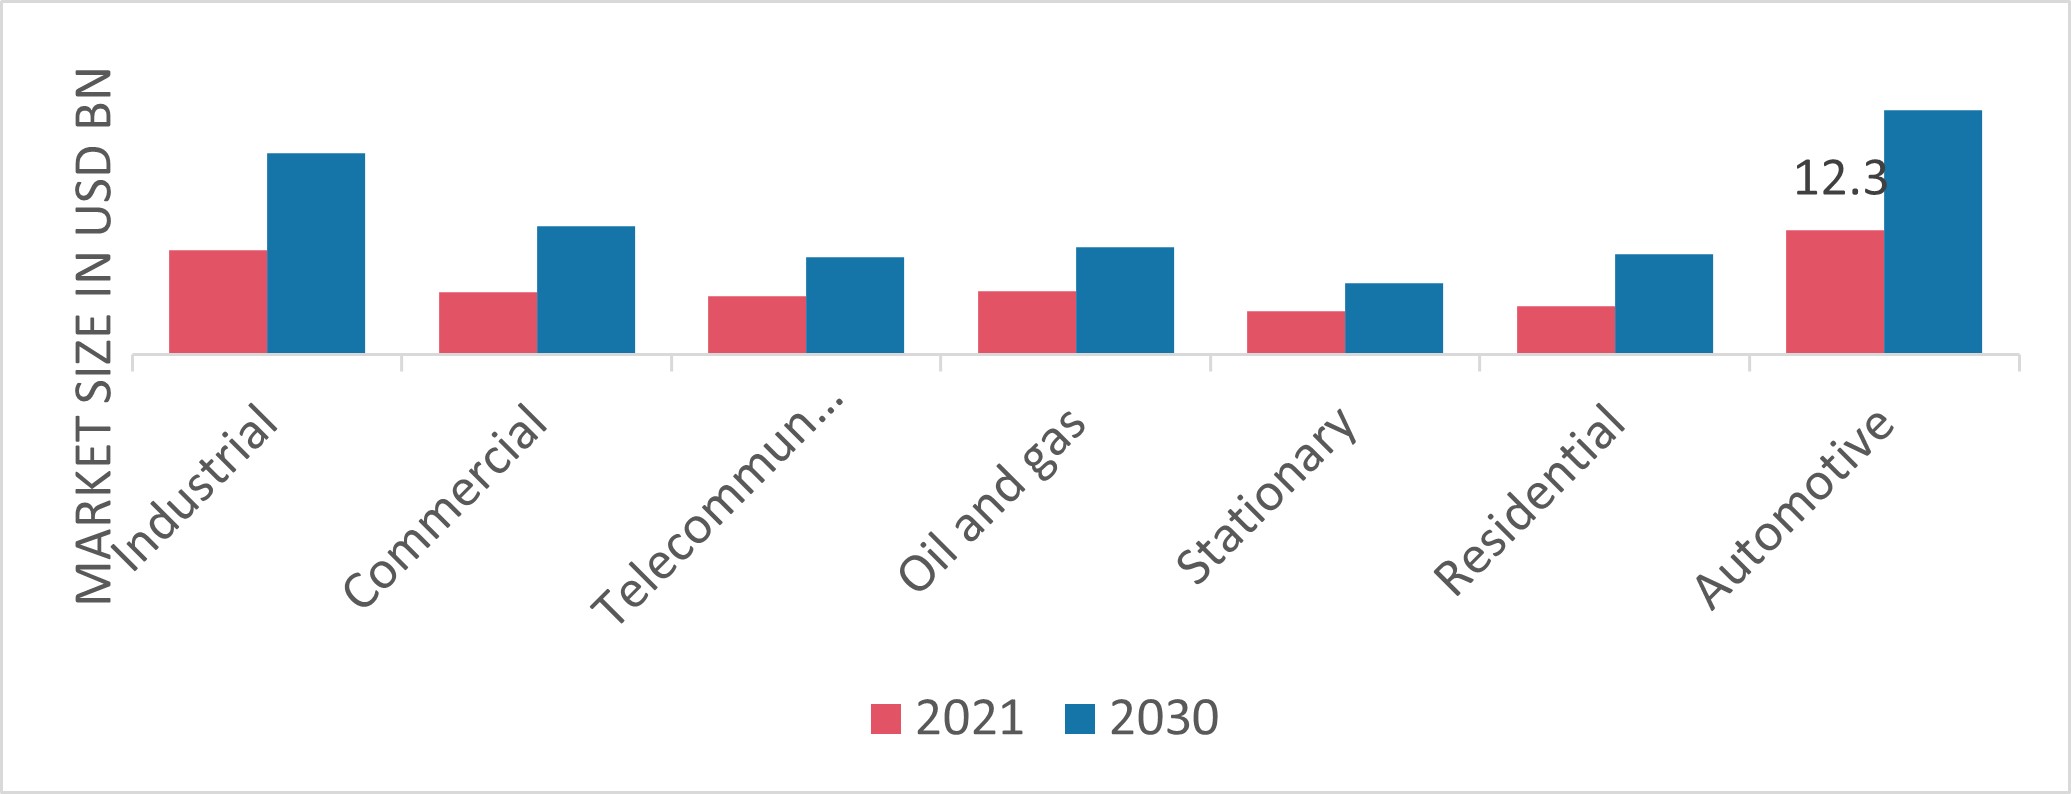 Lead Acid Battery Market, by Surgery, 2021 & 2030